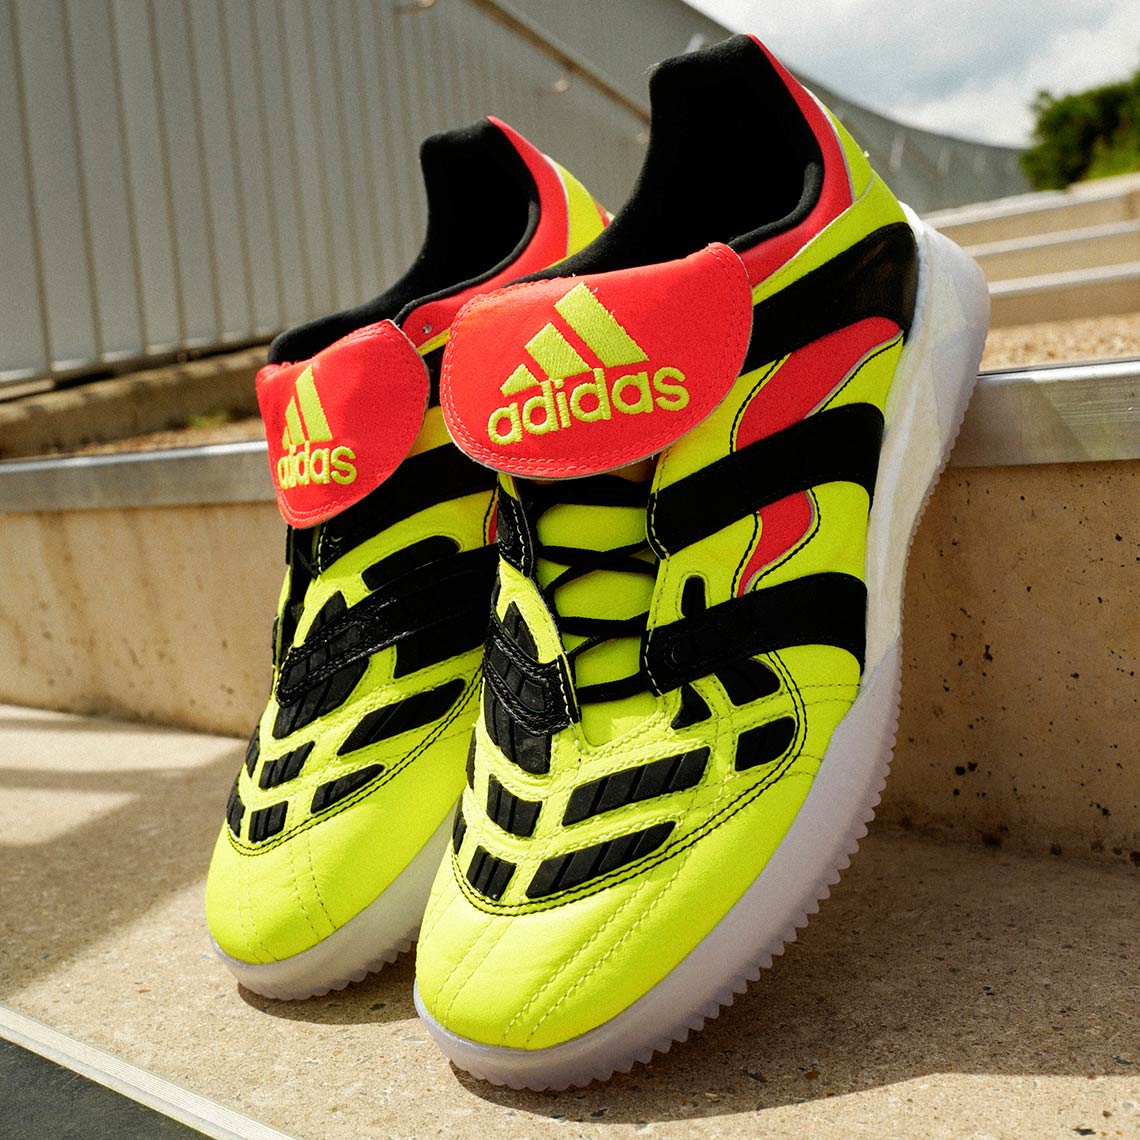 adidas-predator-accelerator-electricity-david-beckham-zidane-5.jpg